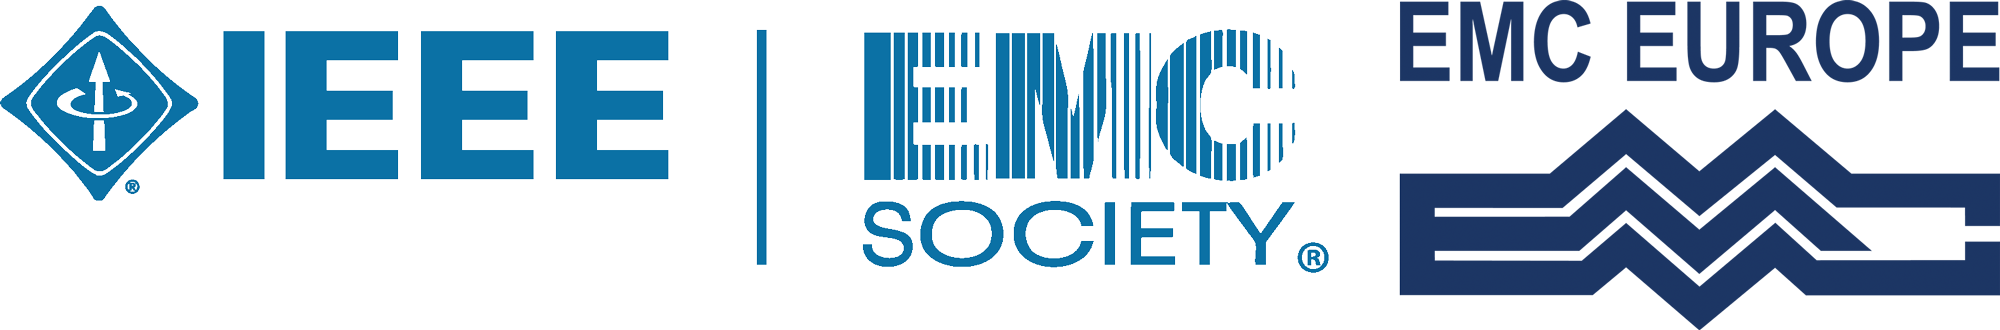 EMC logos